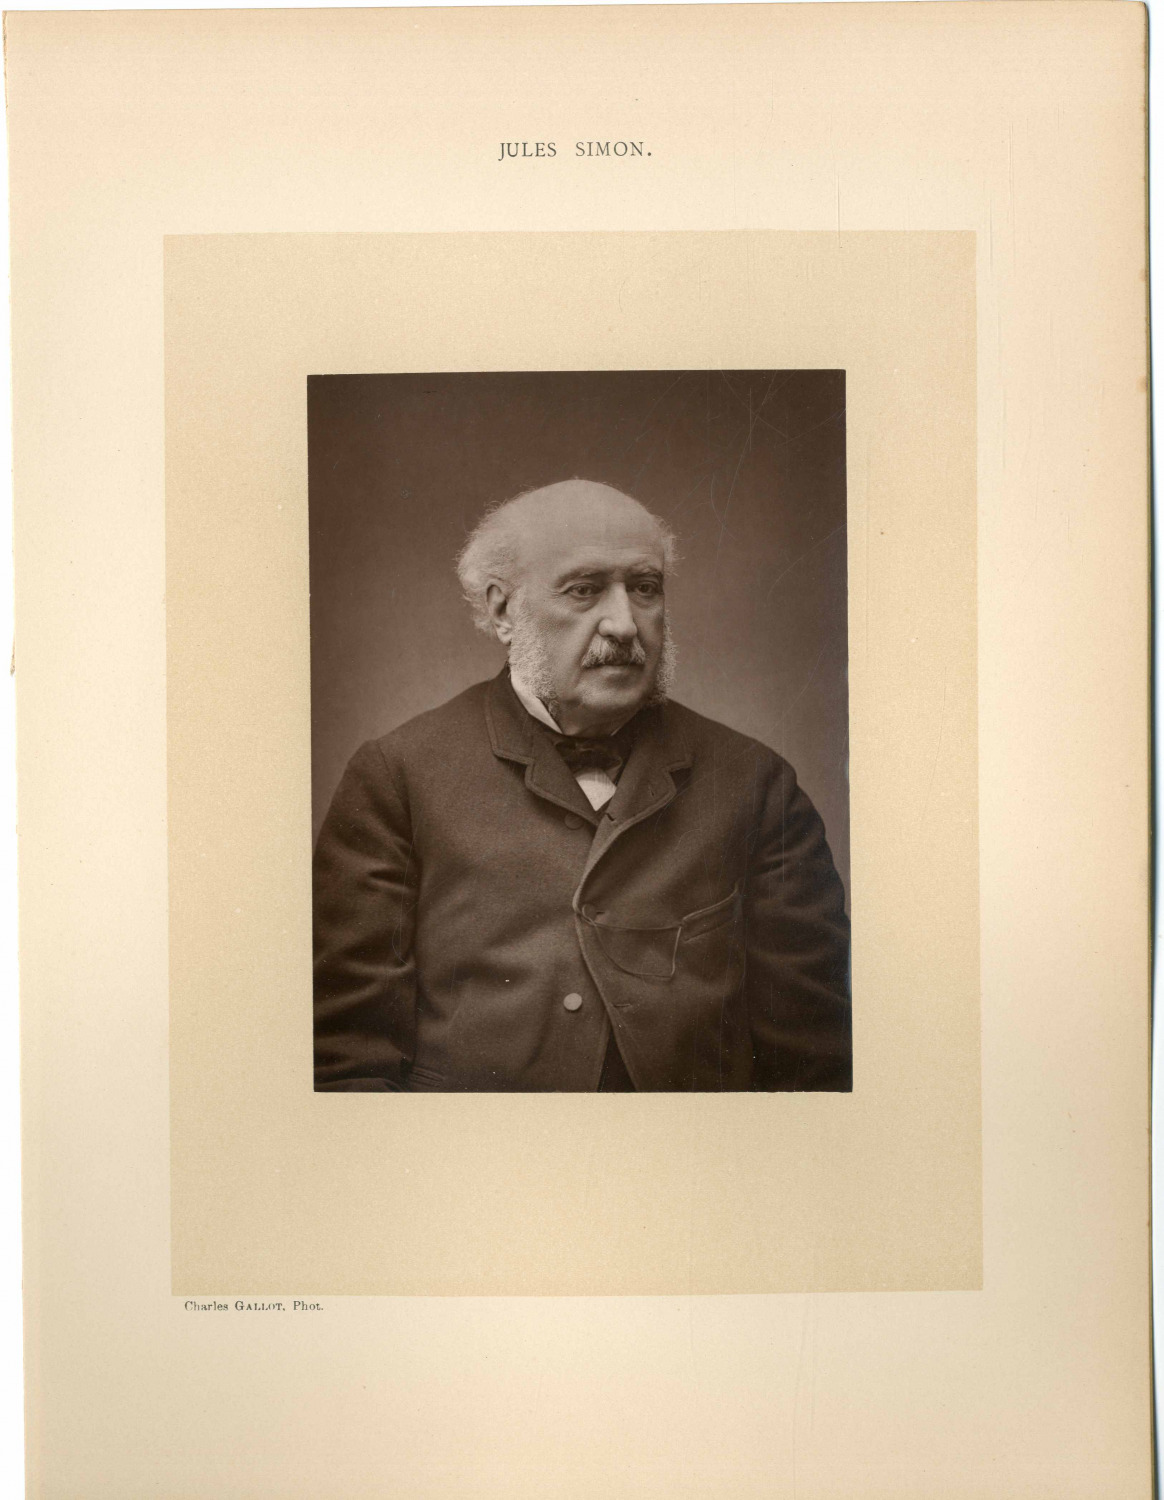 Gallot Charles, France, Jules Simon, philosopher and statesman (1814-1896)